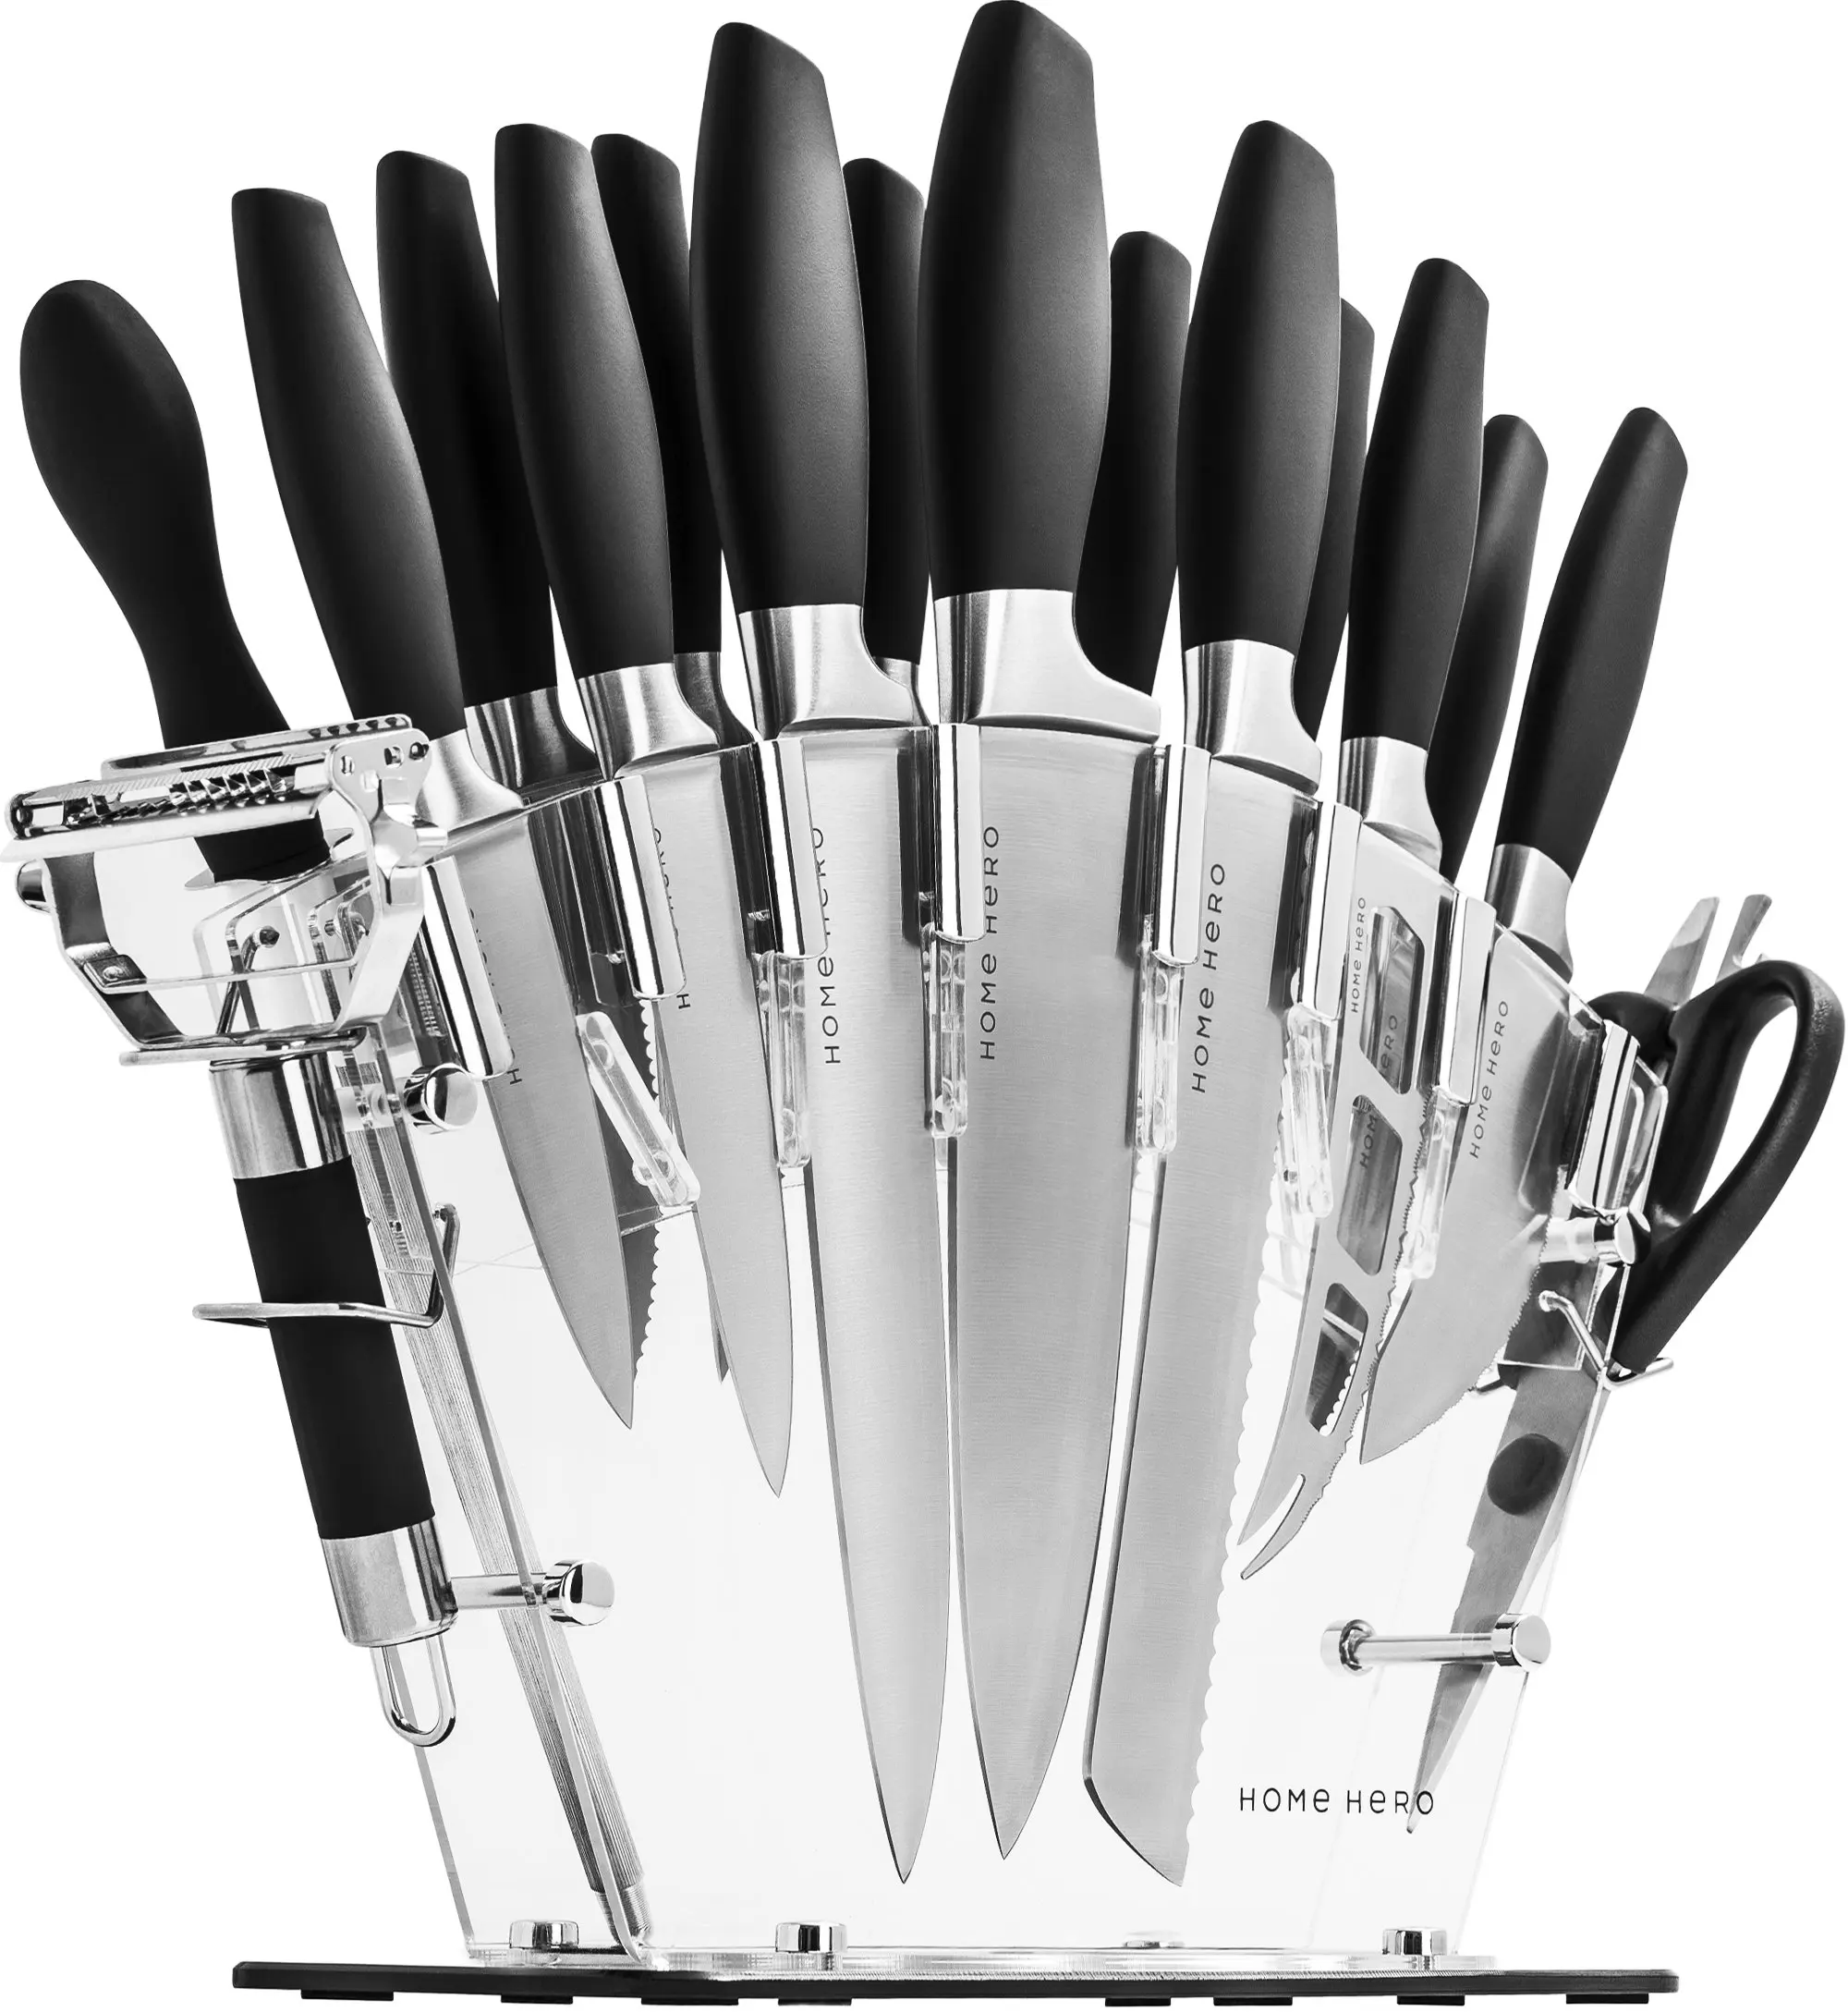 Купить ножи chef. Набор ножей Книфе сет. Ножи Kitchen Knife Stainless Steel. Knife Set набор ножей MH-9200. Набор ножей Agness 911-501.